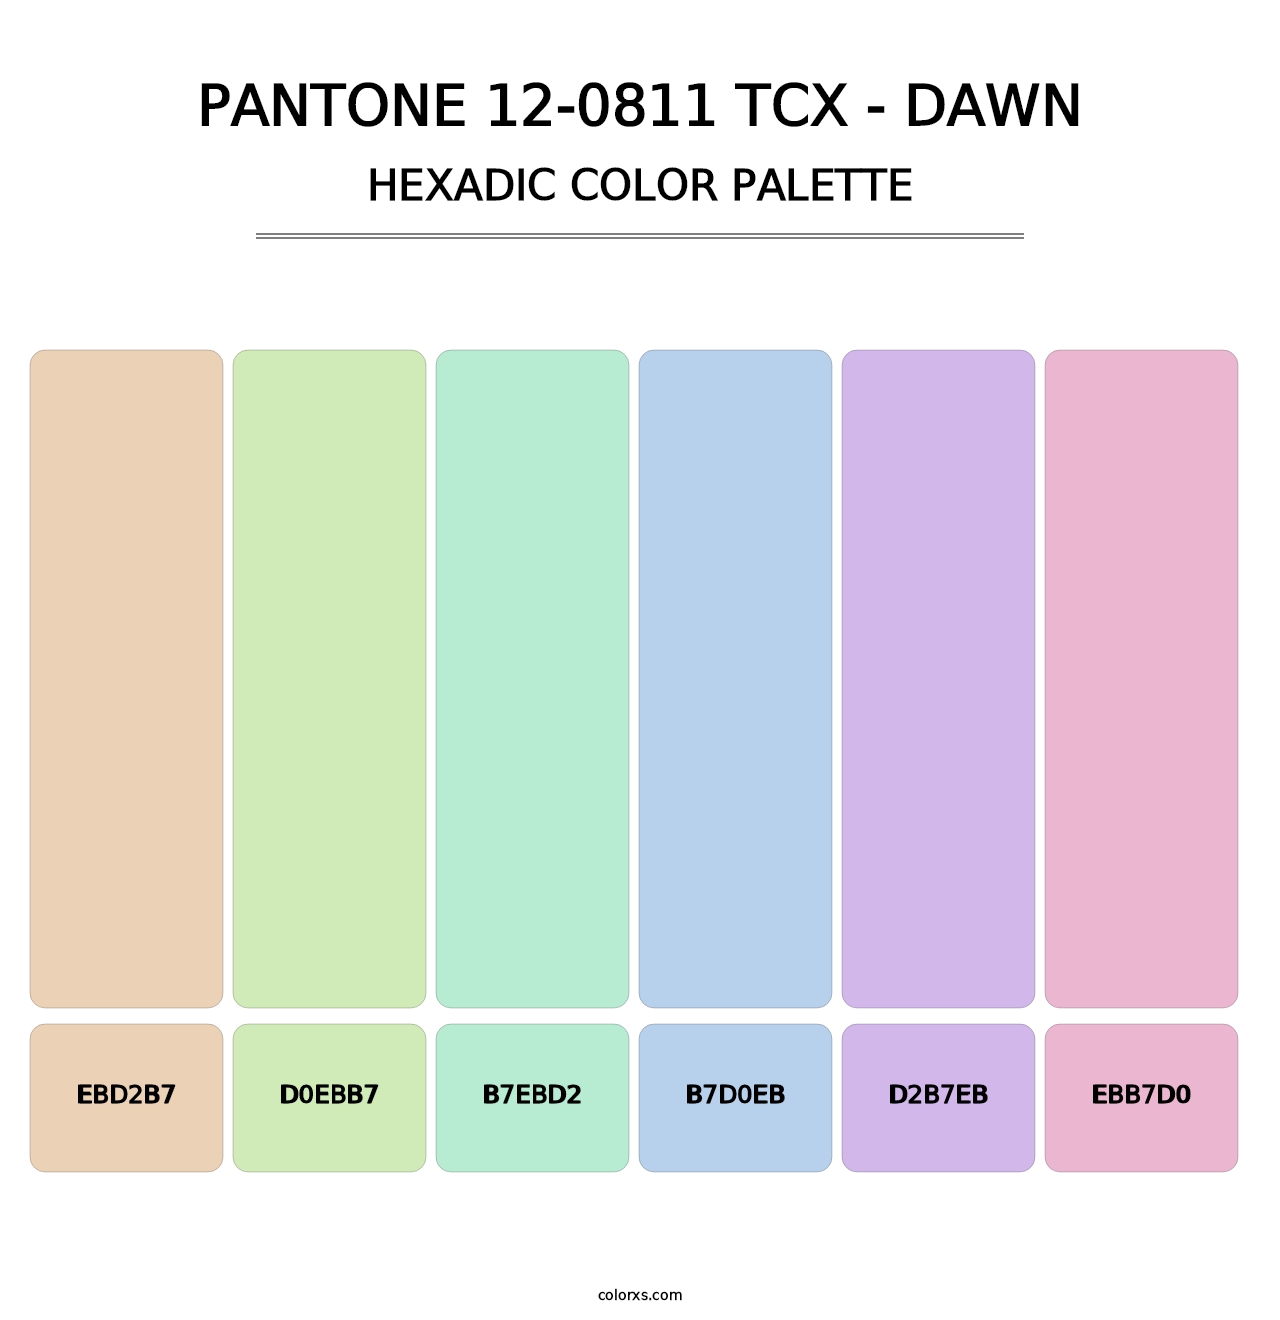 PANTONE 12-0811 TCX - Dawn - Hexadic Color Palette